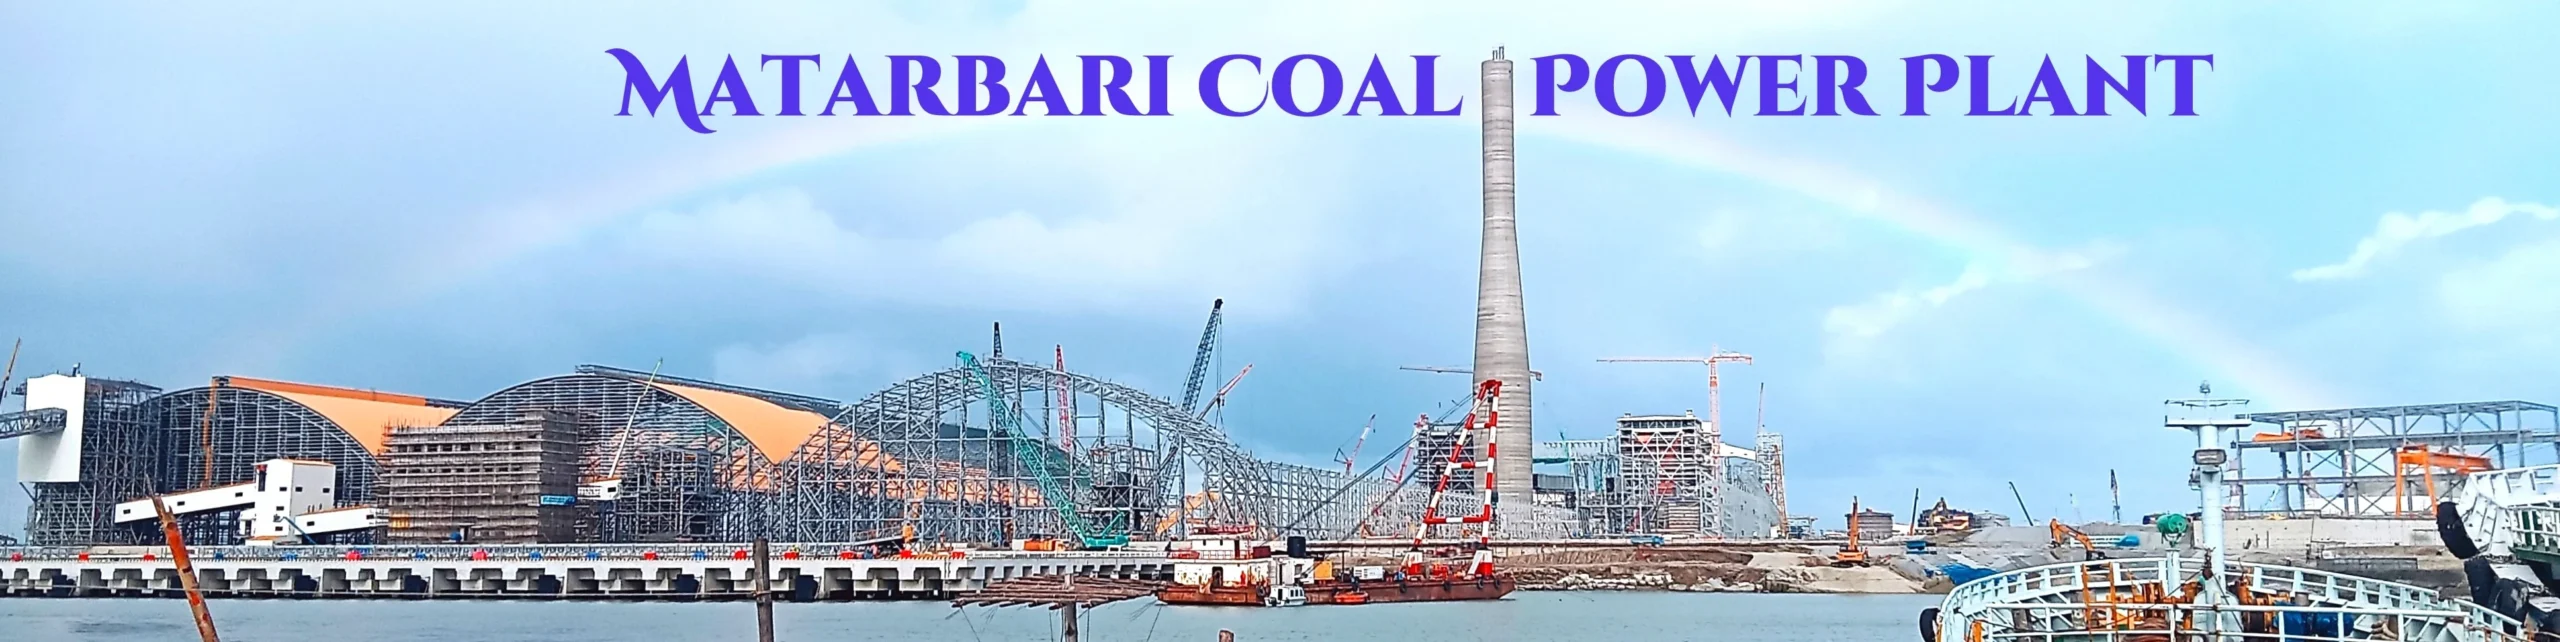 Matarbari Coal Power Plant-02